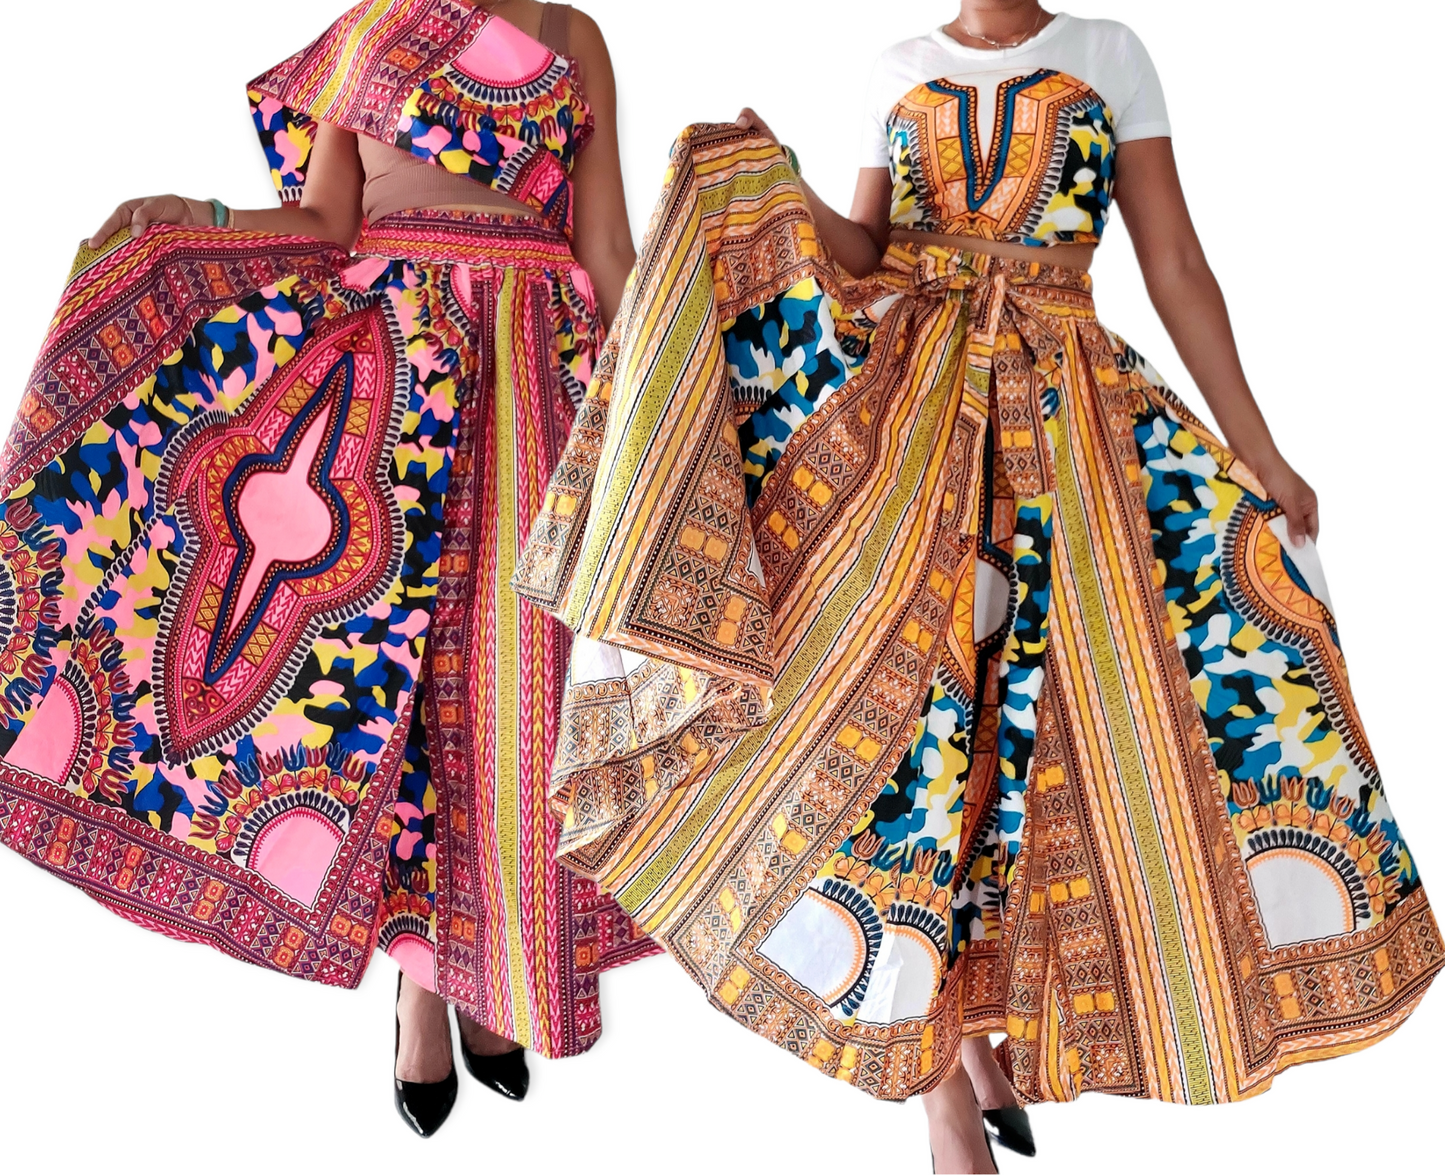 1091- Women Long Dashiki Print Skirt